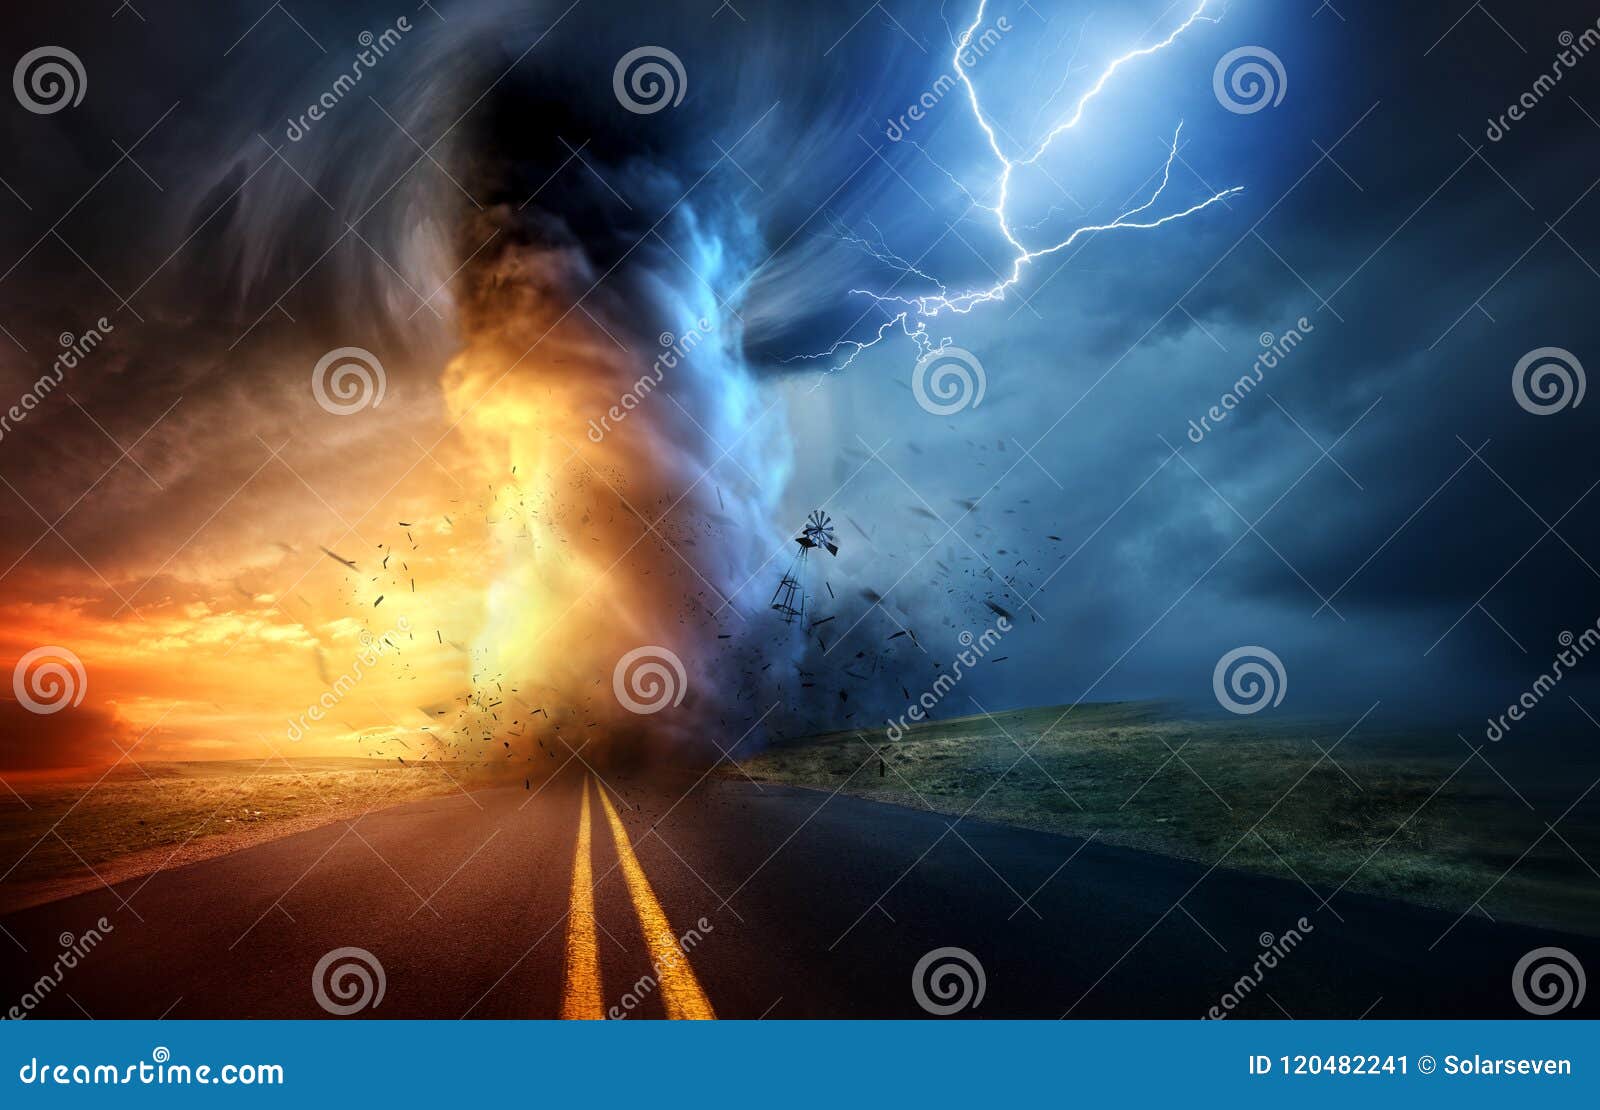 dramatic storm and tornado